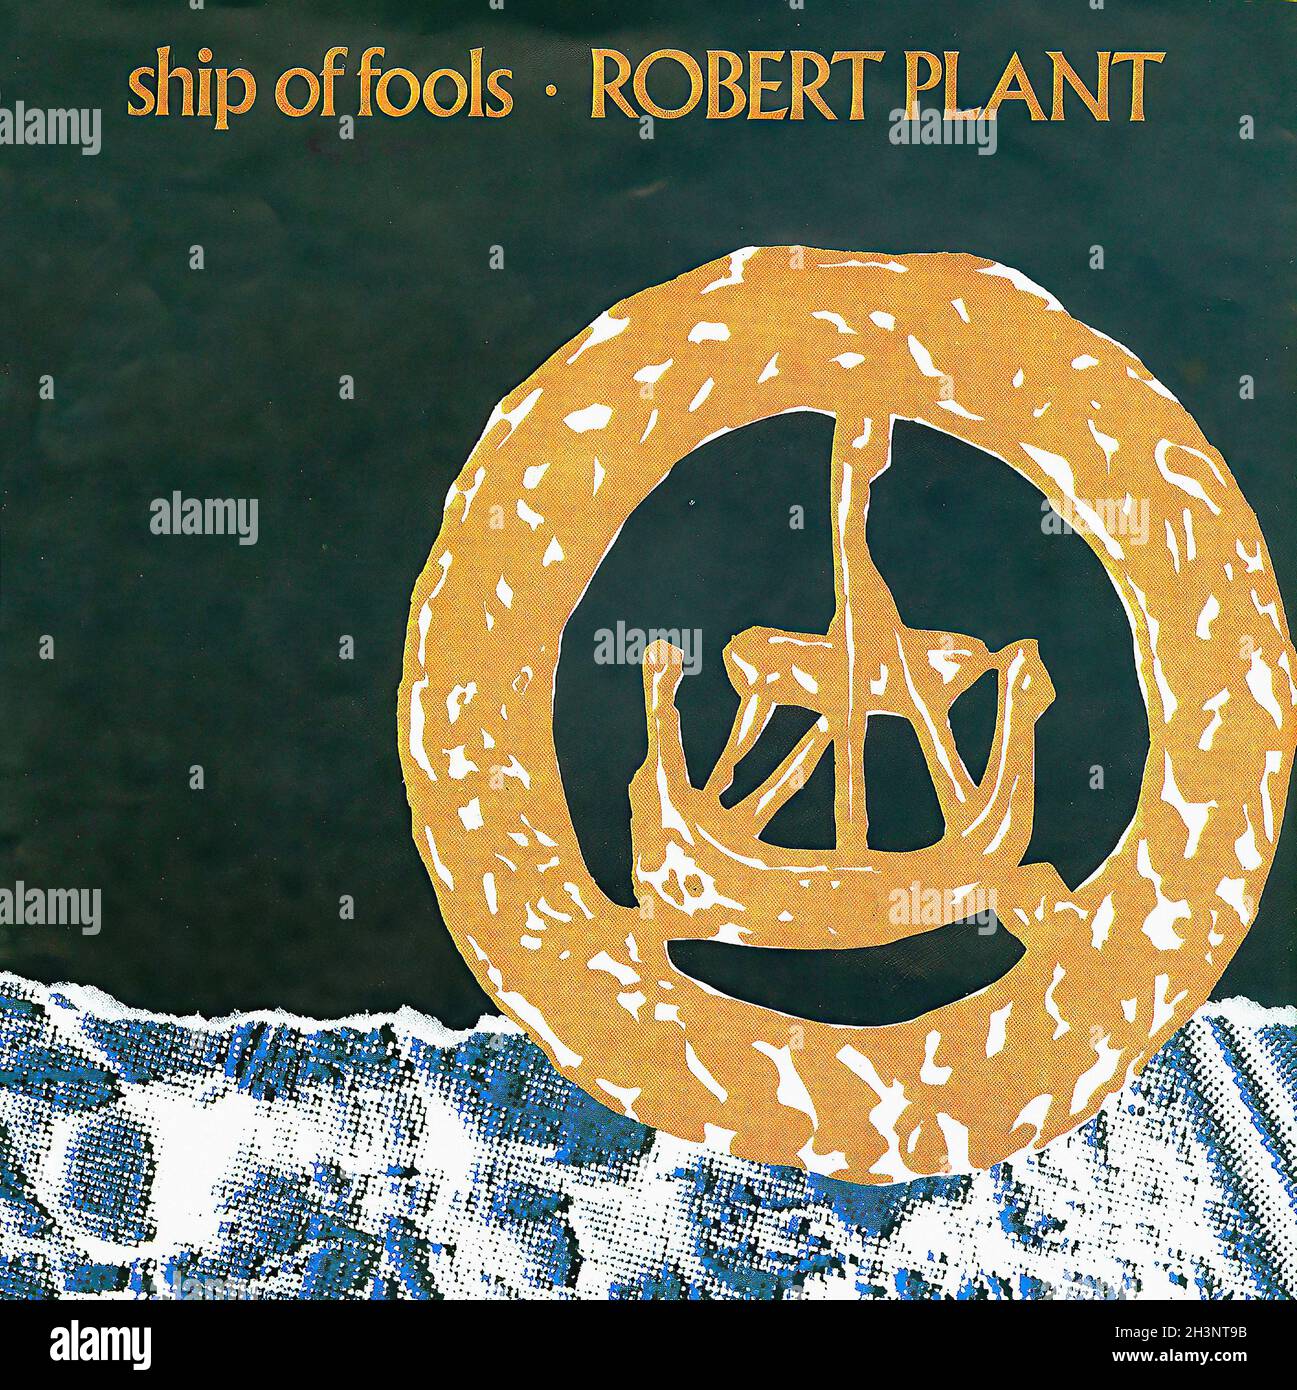 Vintage Vinyl Recording - Plant, Robert - Ship Of Fools - D - 1988 Stock Photo